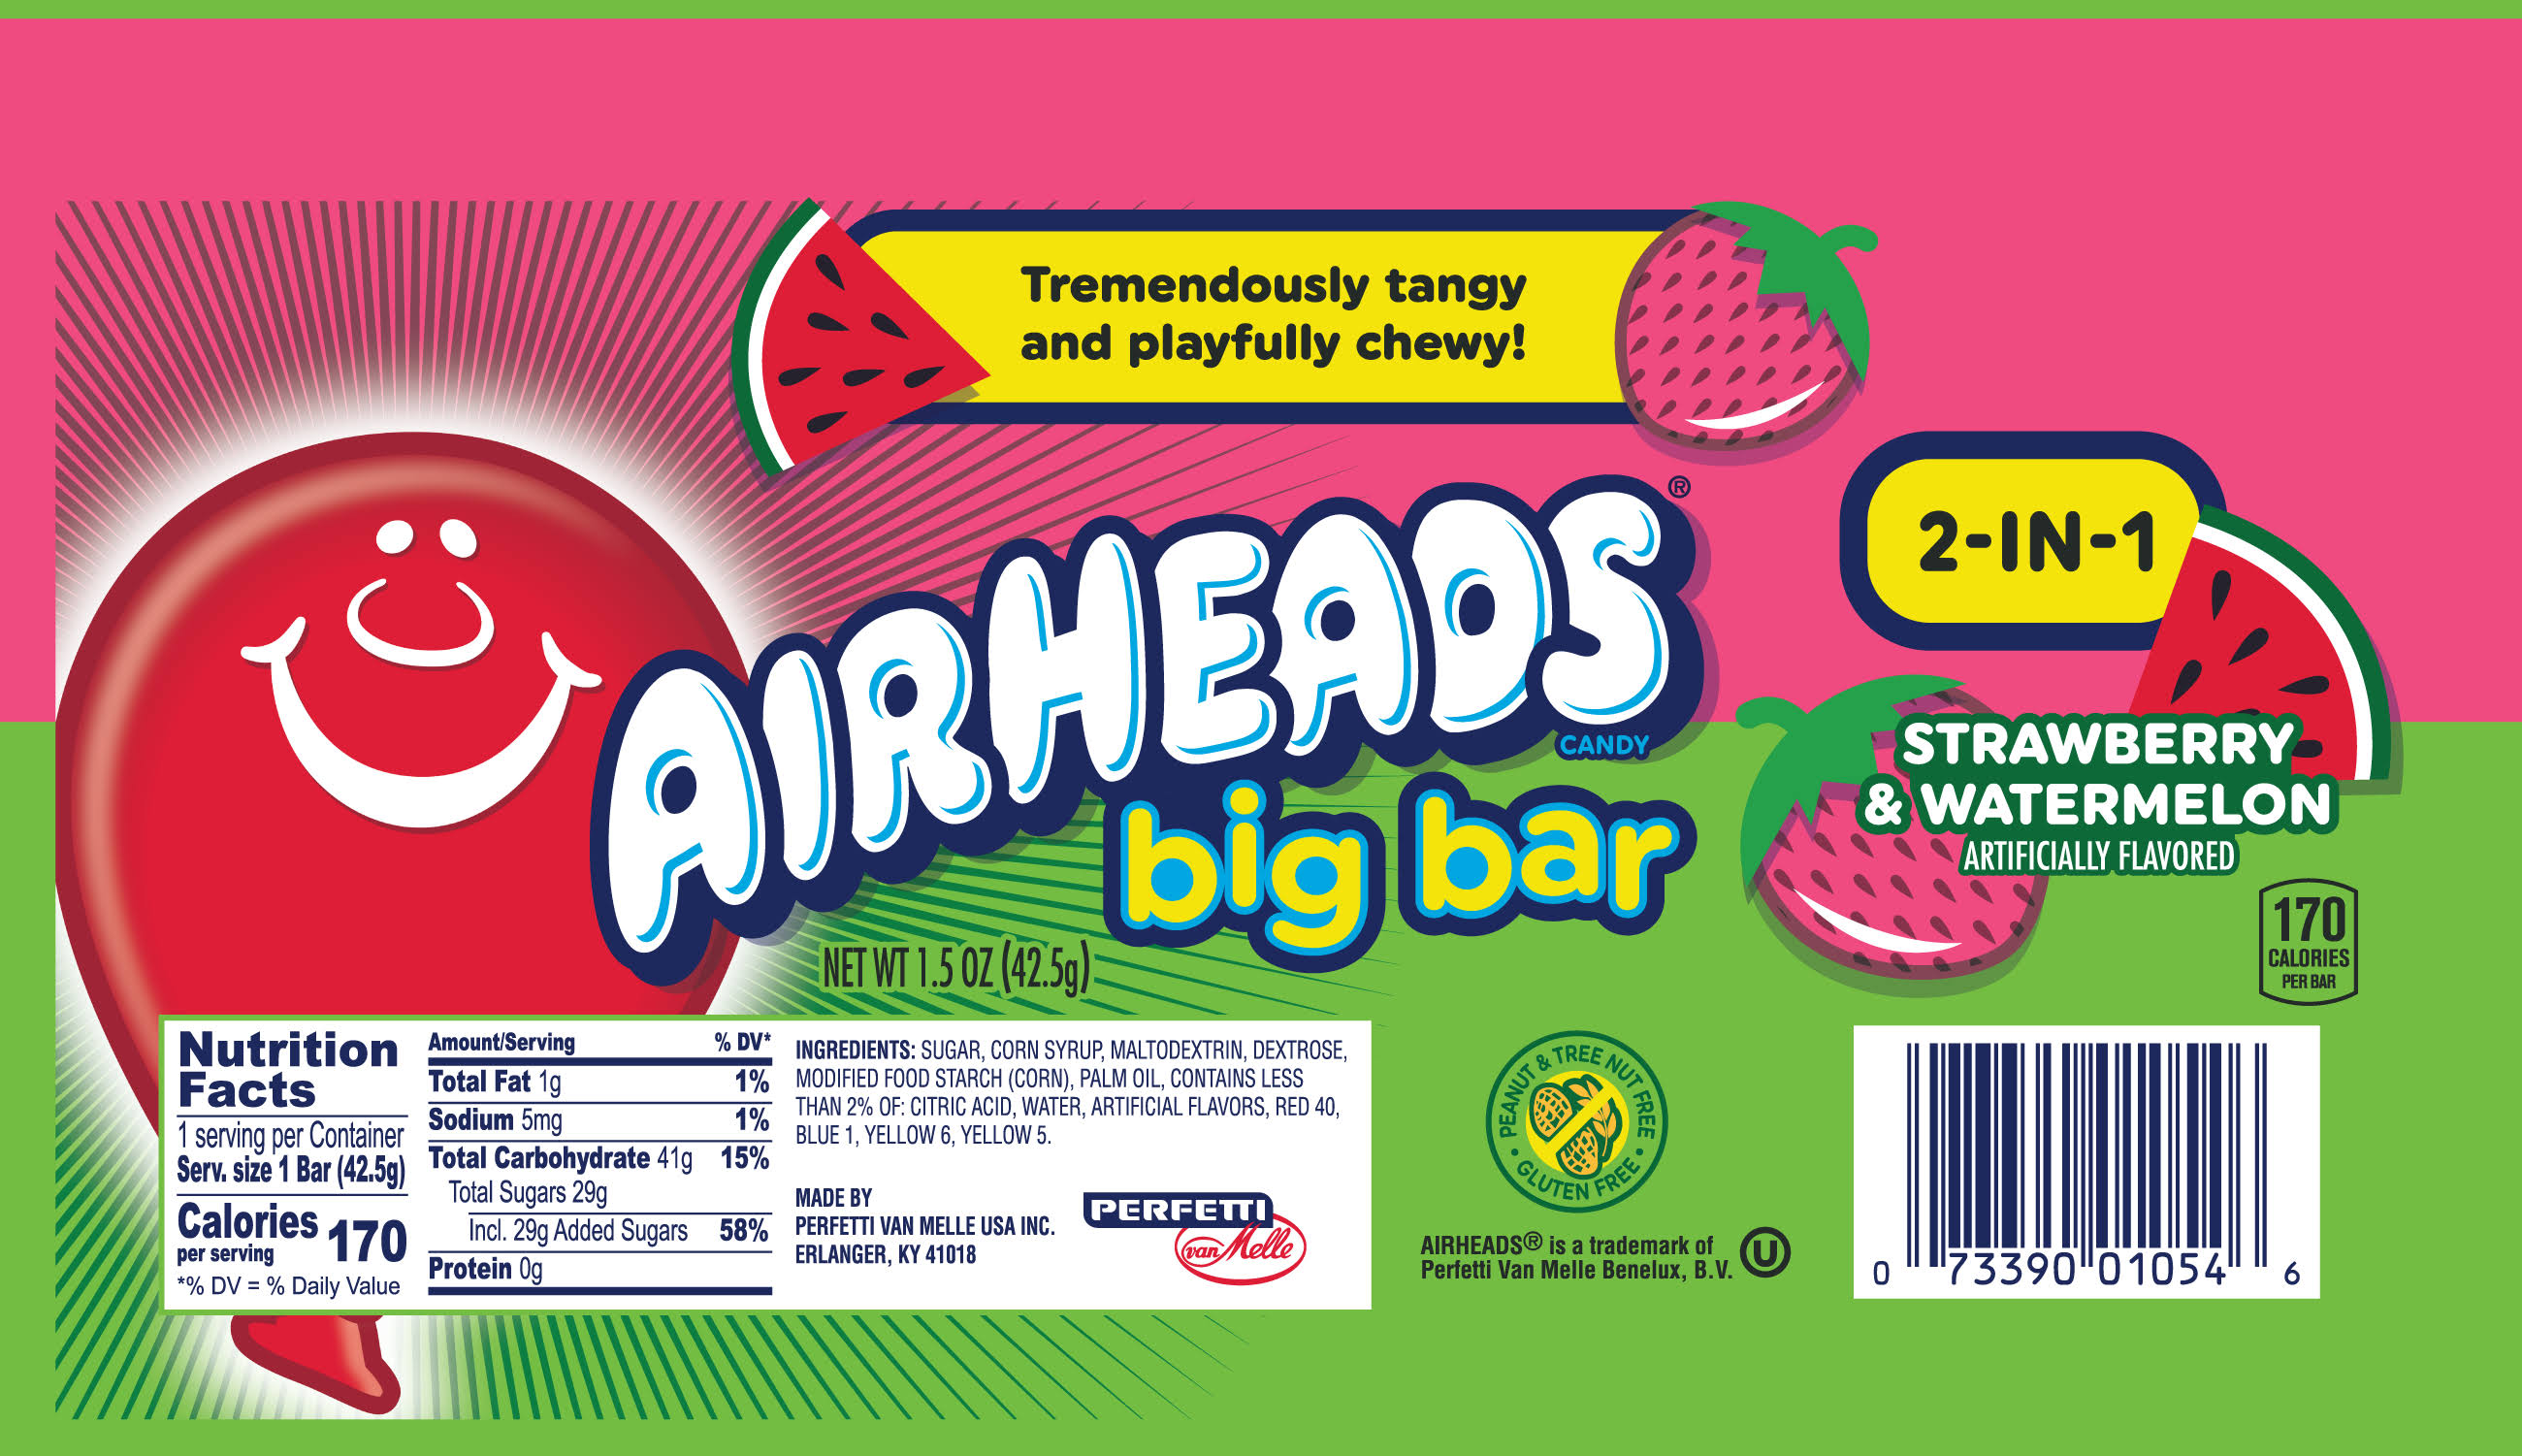 Airheads Candy, Strawberry & Watermelon, 2-in-1 Big Bar - 1.5 oz